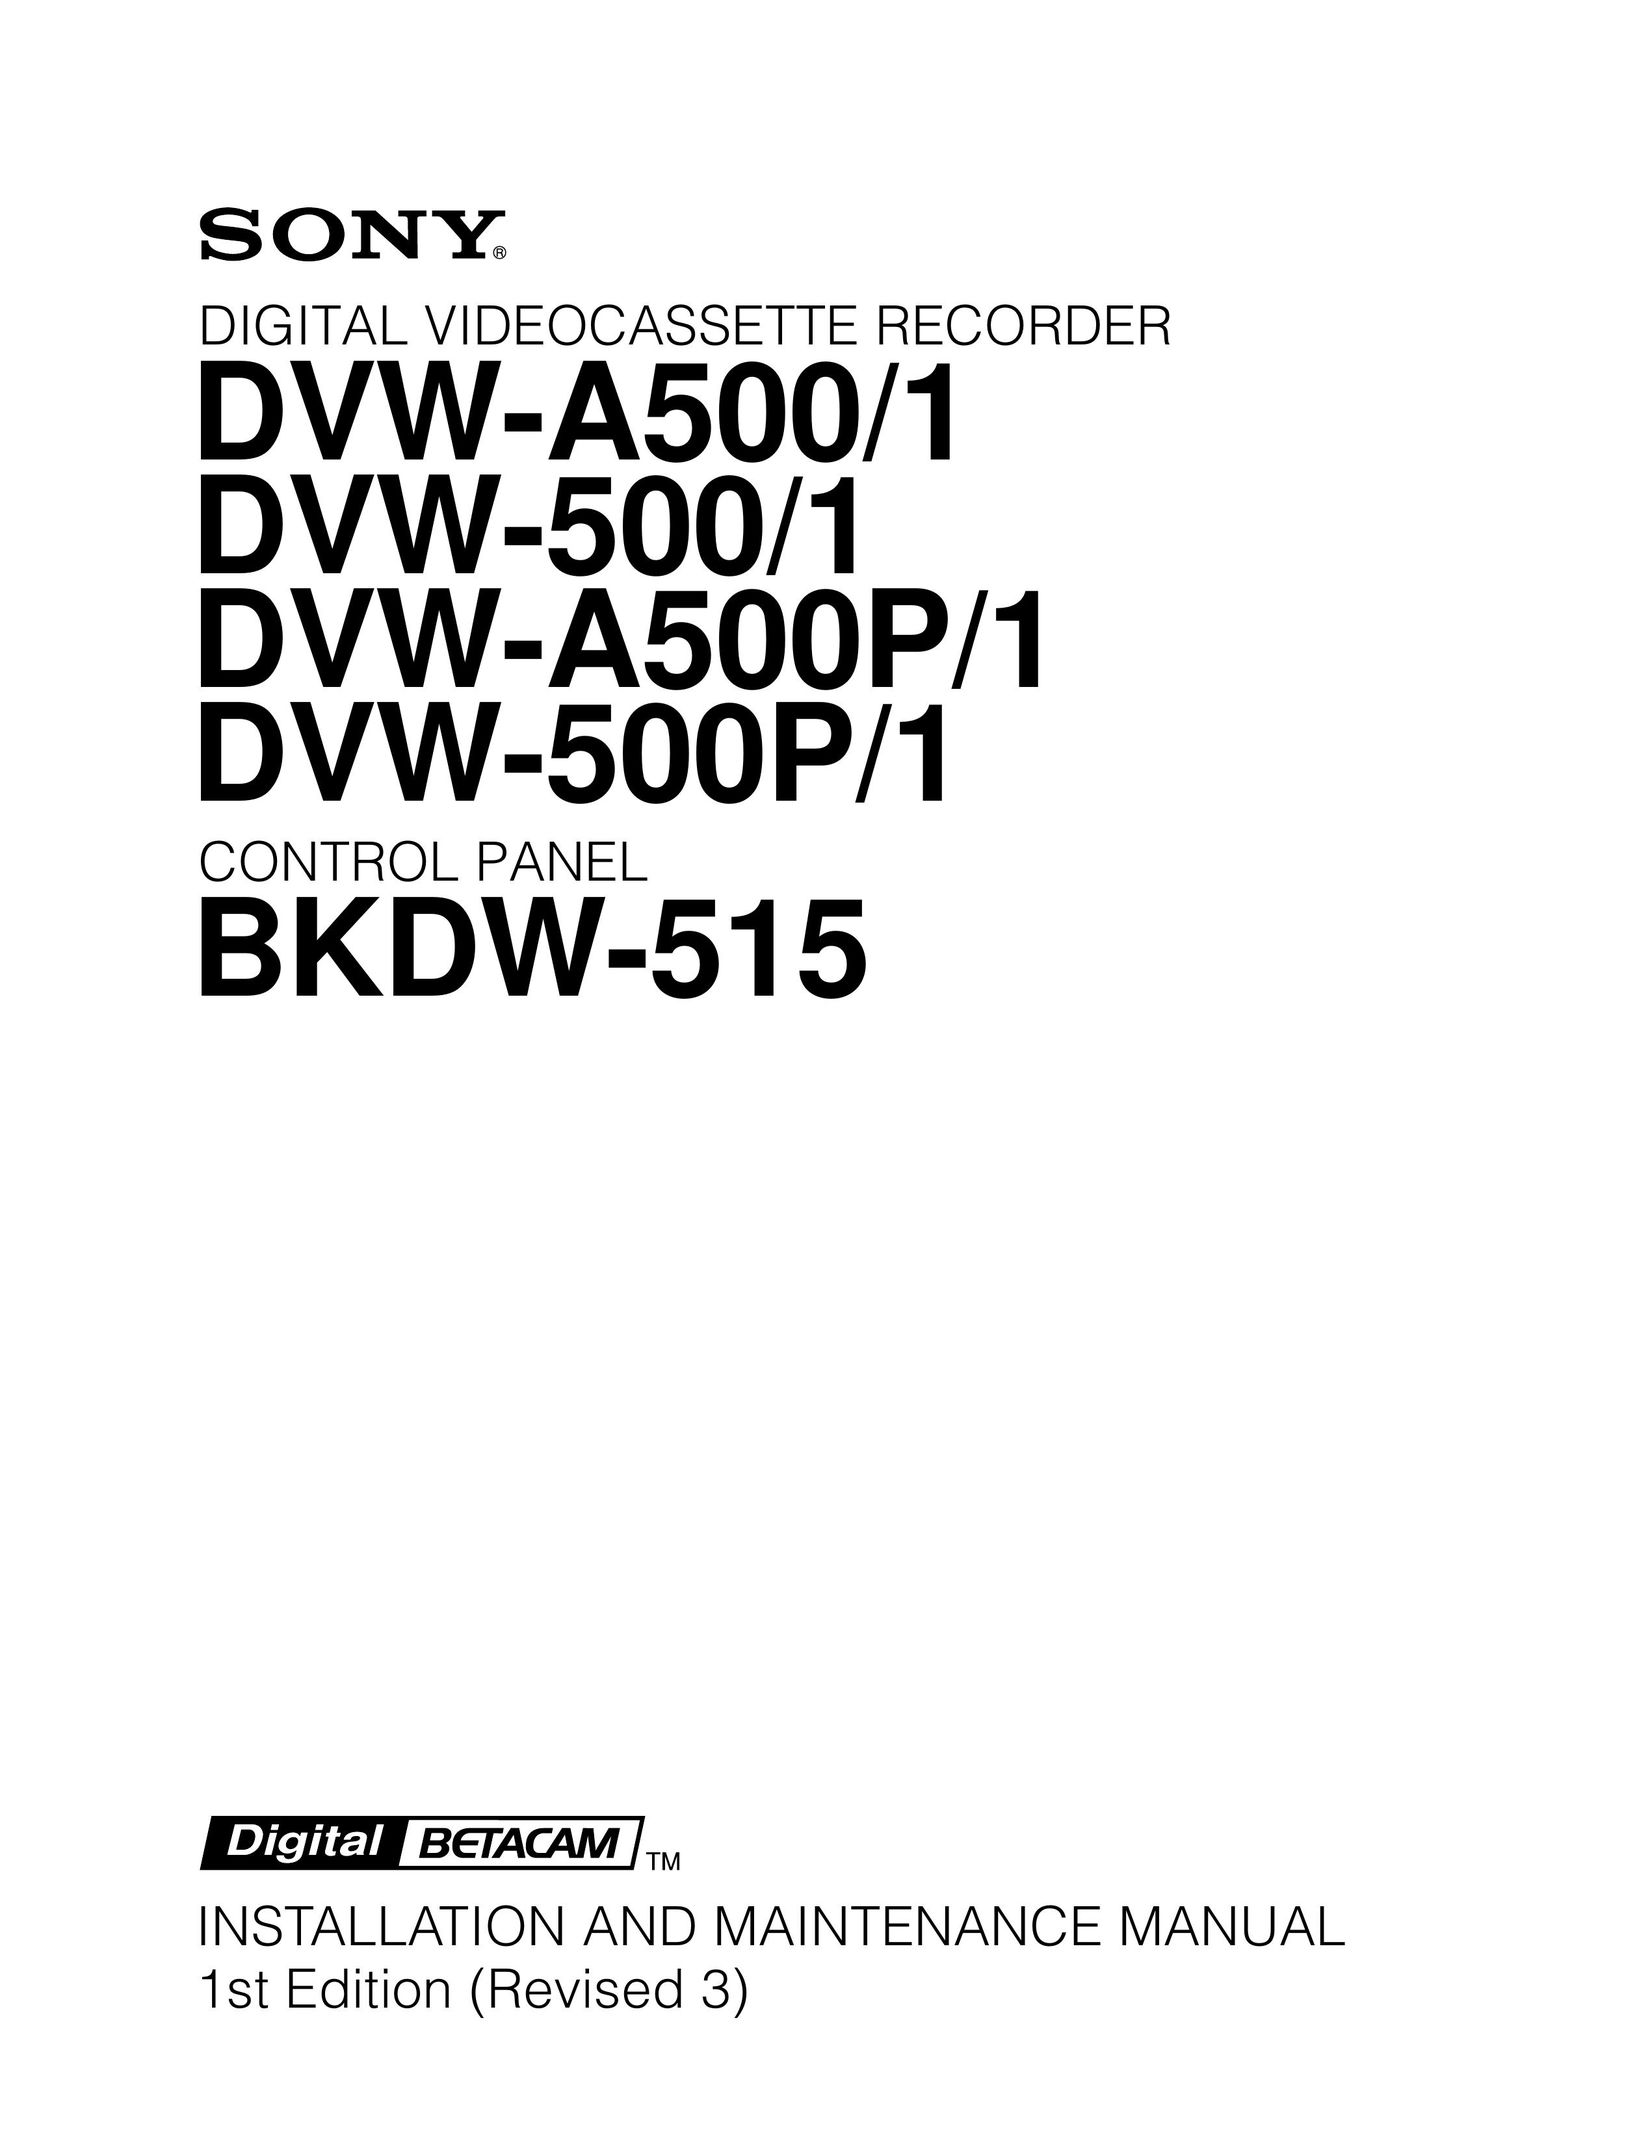 Sony DVW-500/1 VCR User Manual